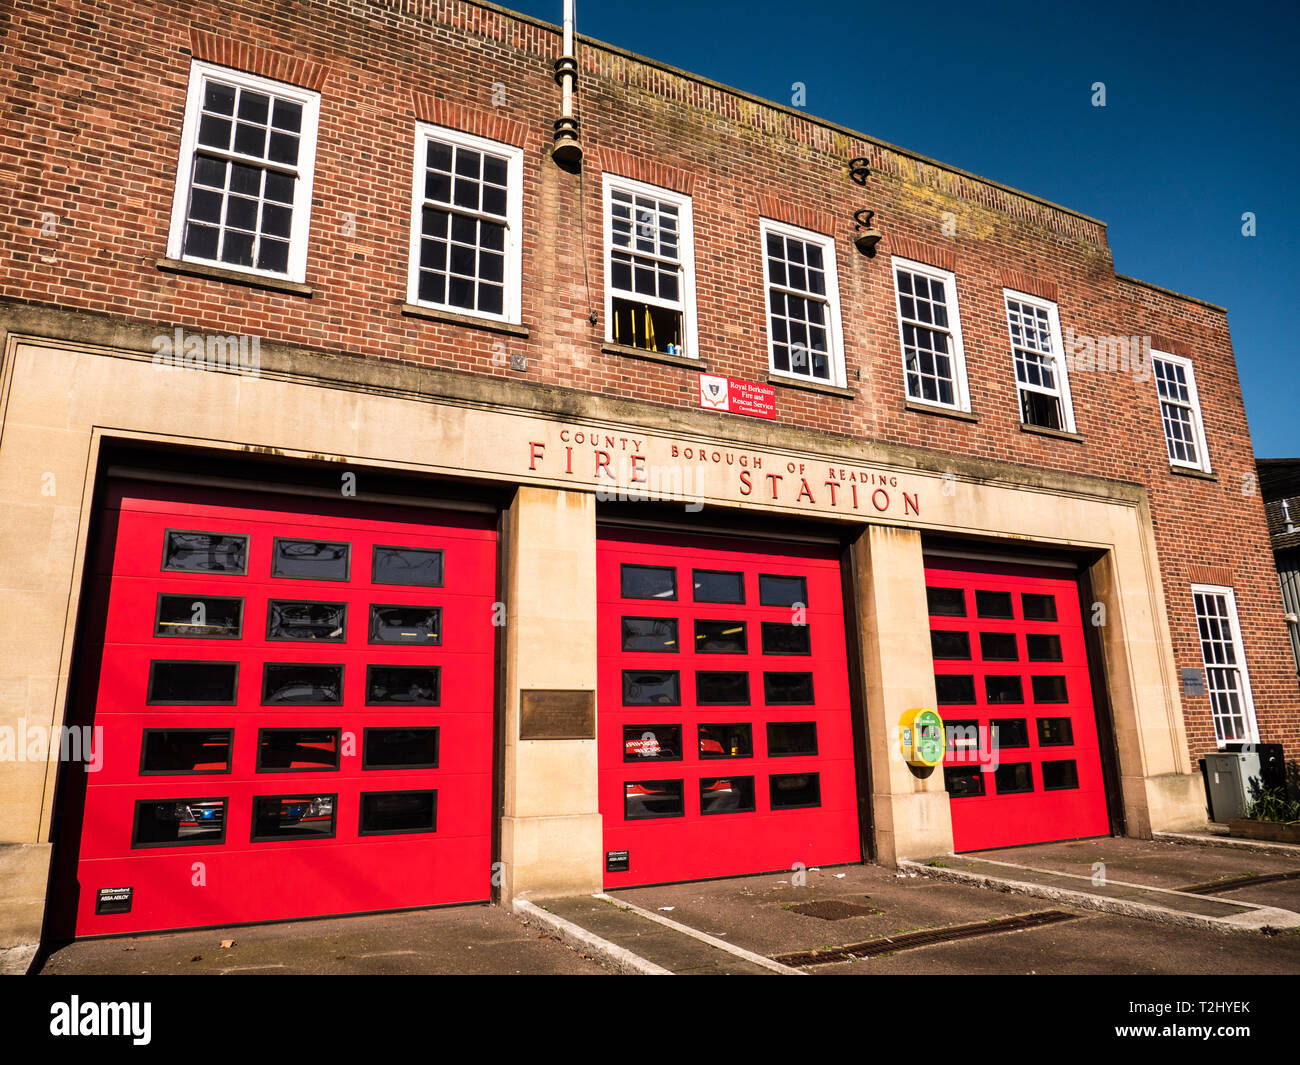 County Borough of Reading Fire Station, Caversham Road, Reading, Berkshire, England, UK, GB. Stock Photo